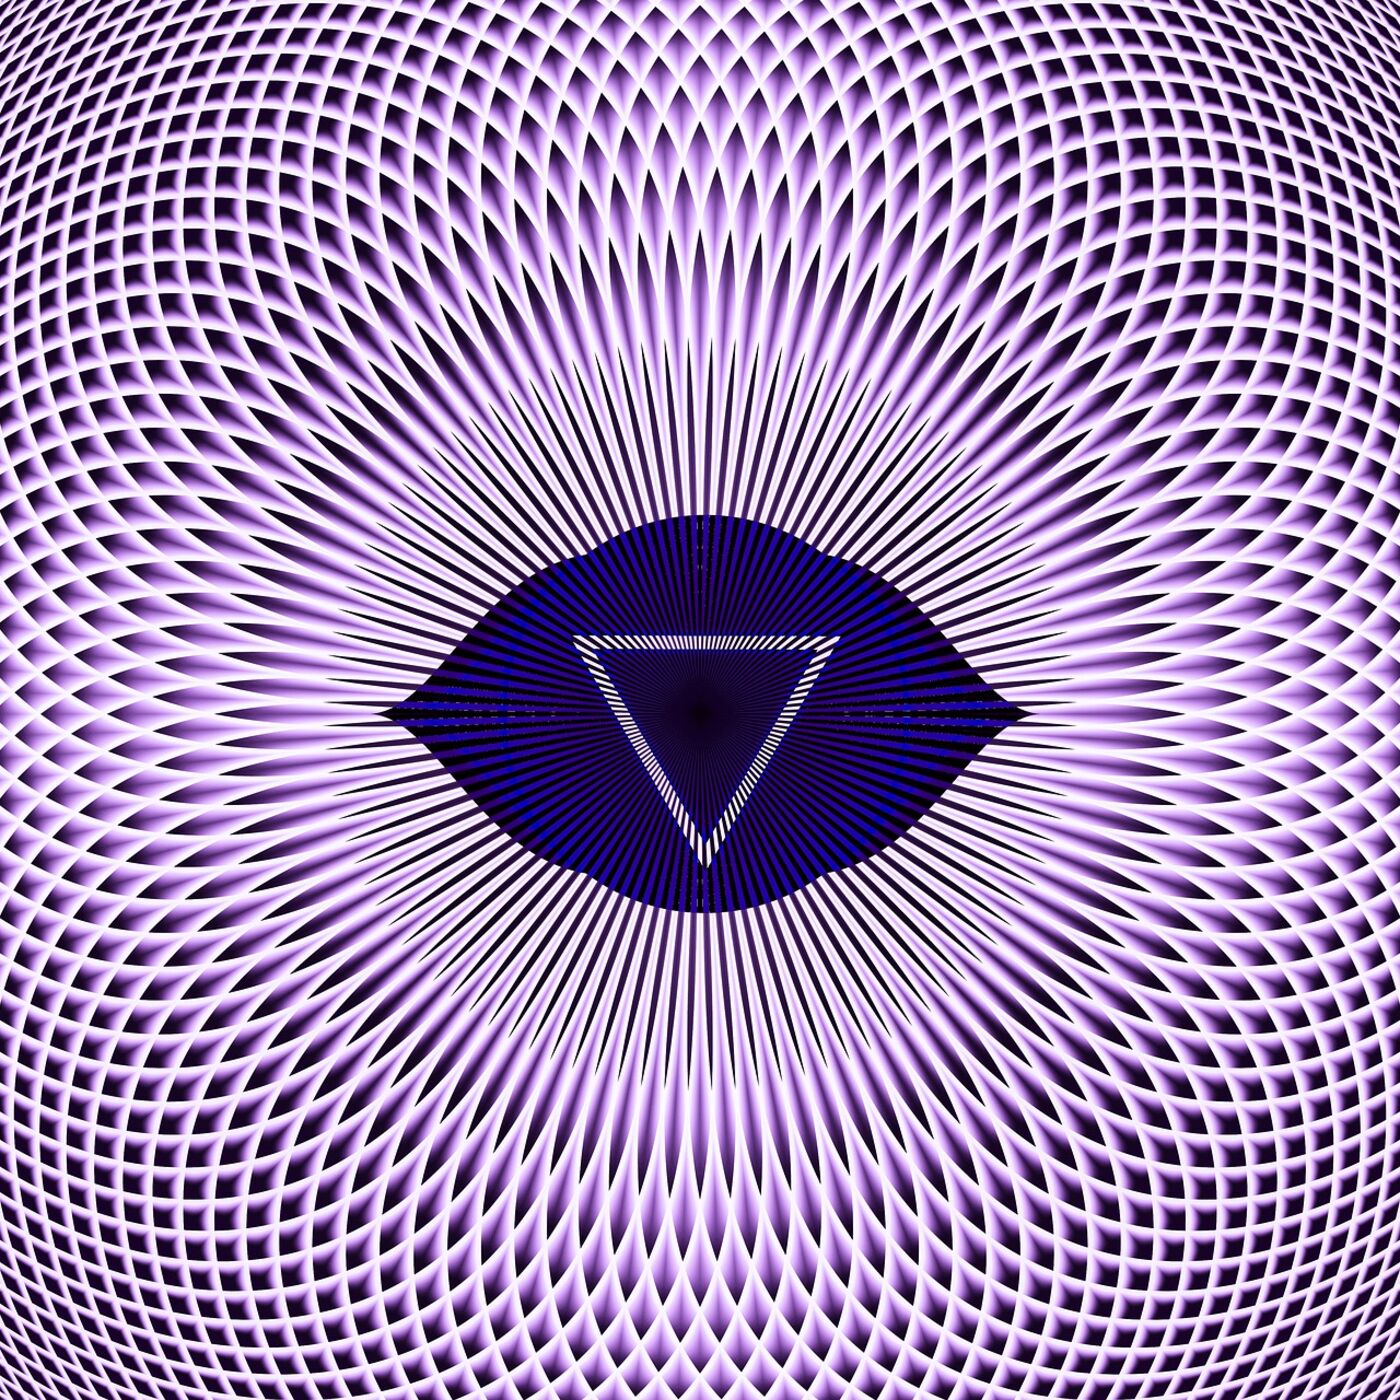 Third Eye Chakra Activation Meditation Music Image